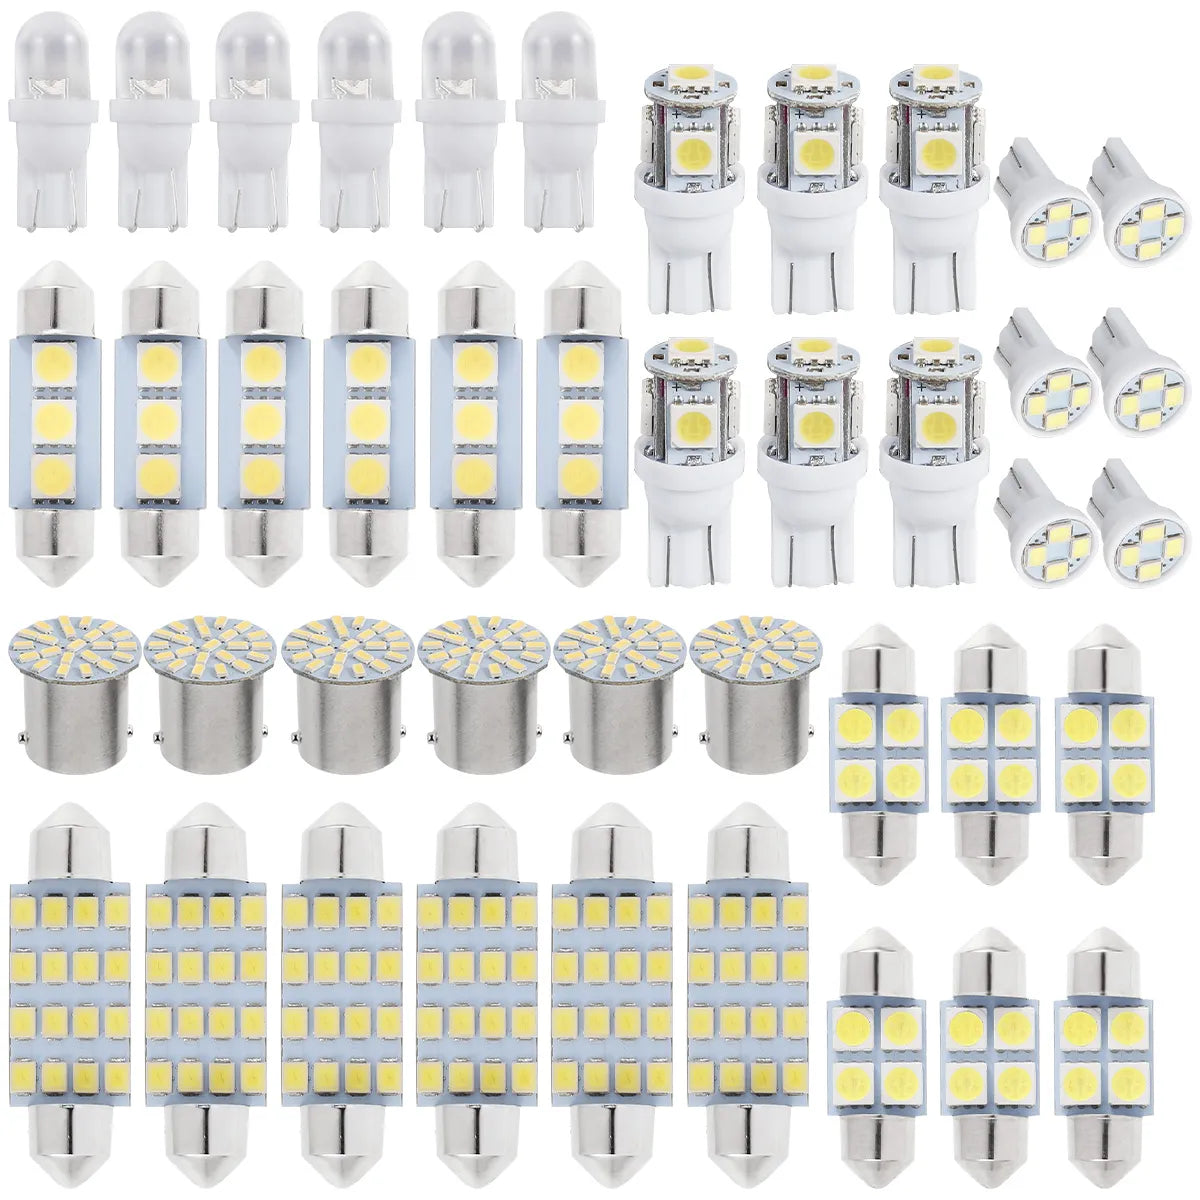 LED Car Interior Lights T10 Xenon White SMD Bulbs Set - Upgrade Your Car's Style  petlums.com 42pcs  